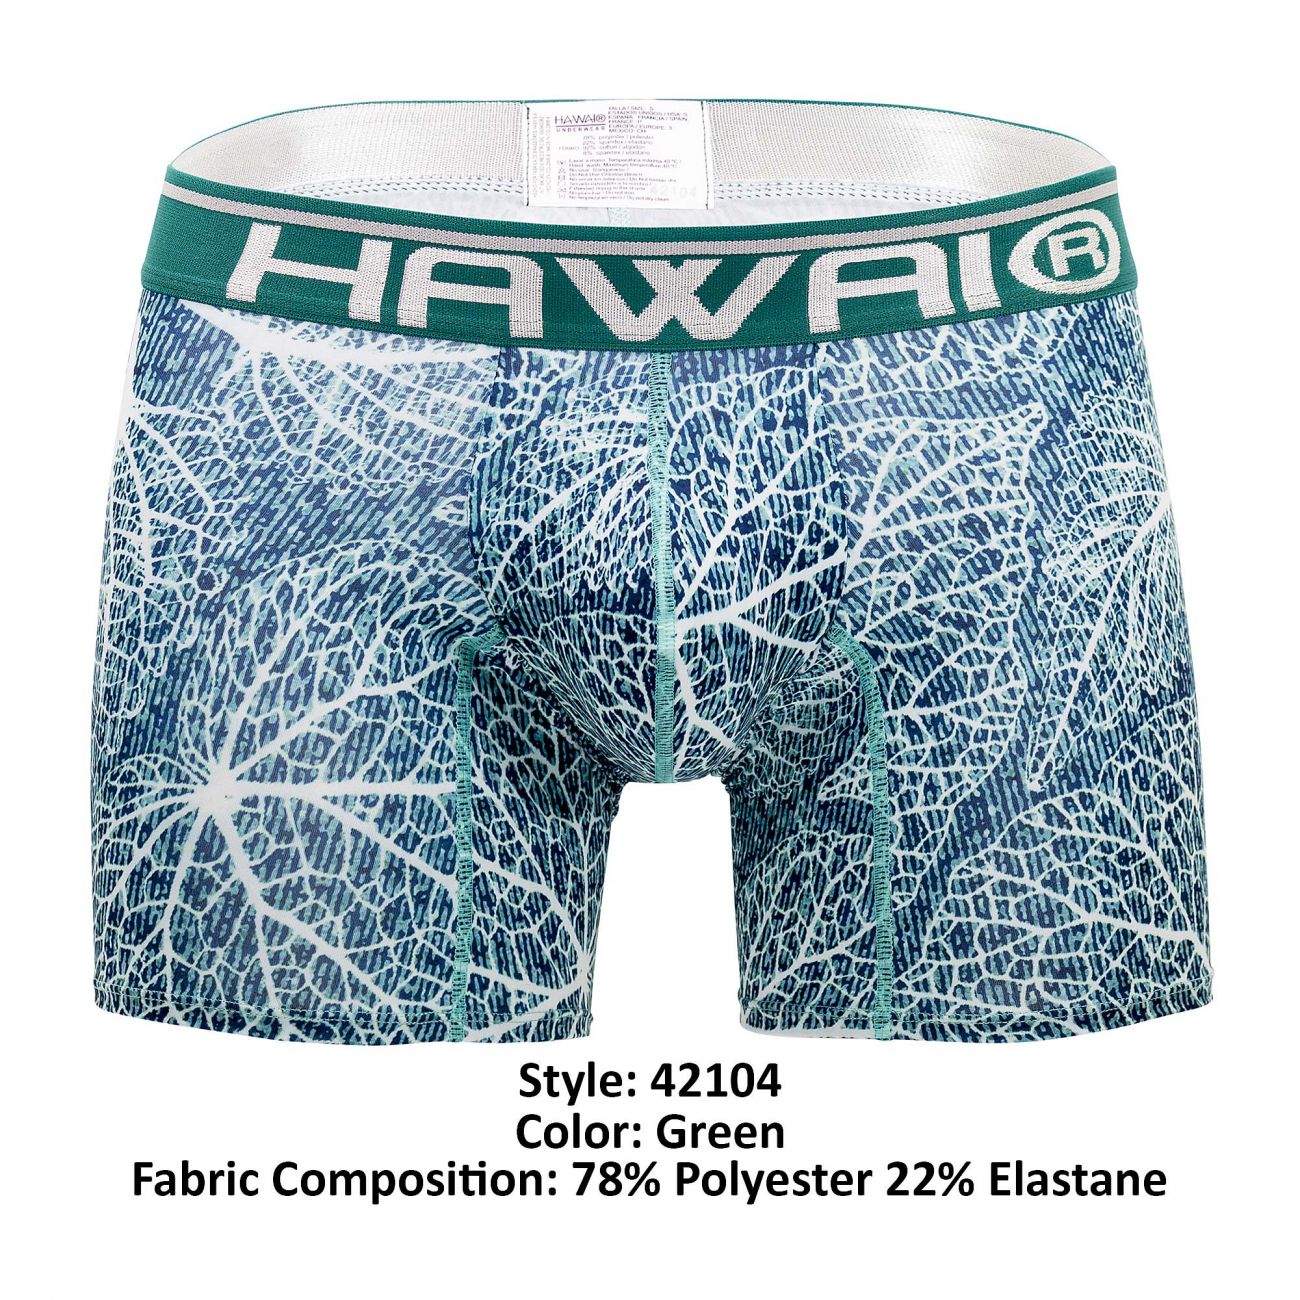 HAWAI Printed Boxer Briefs